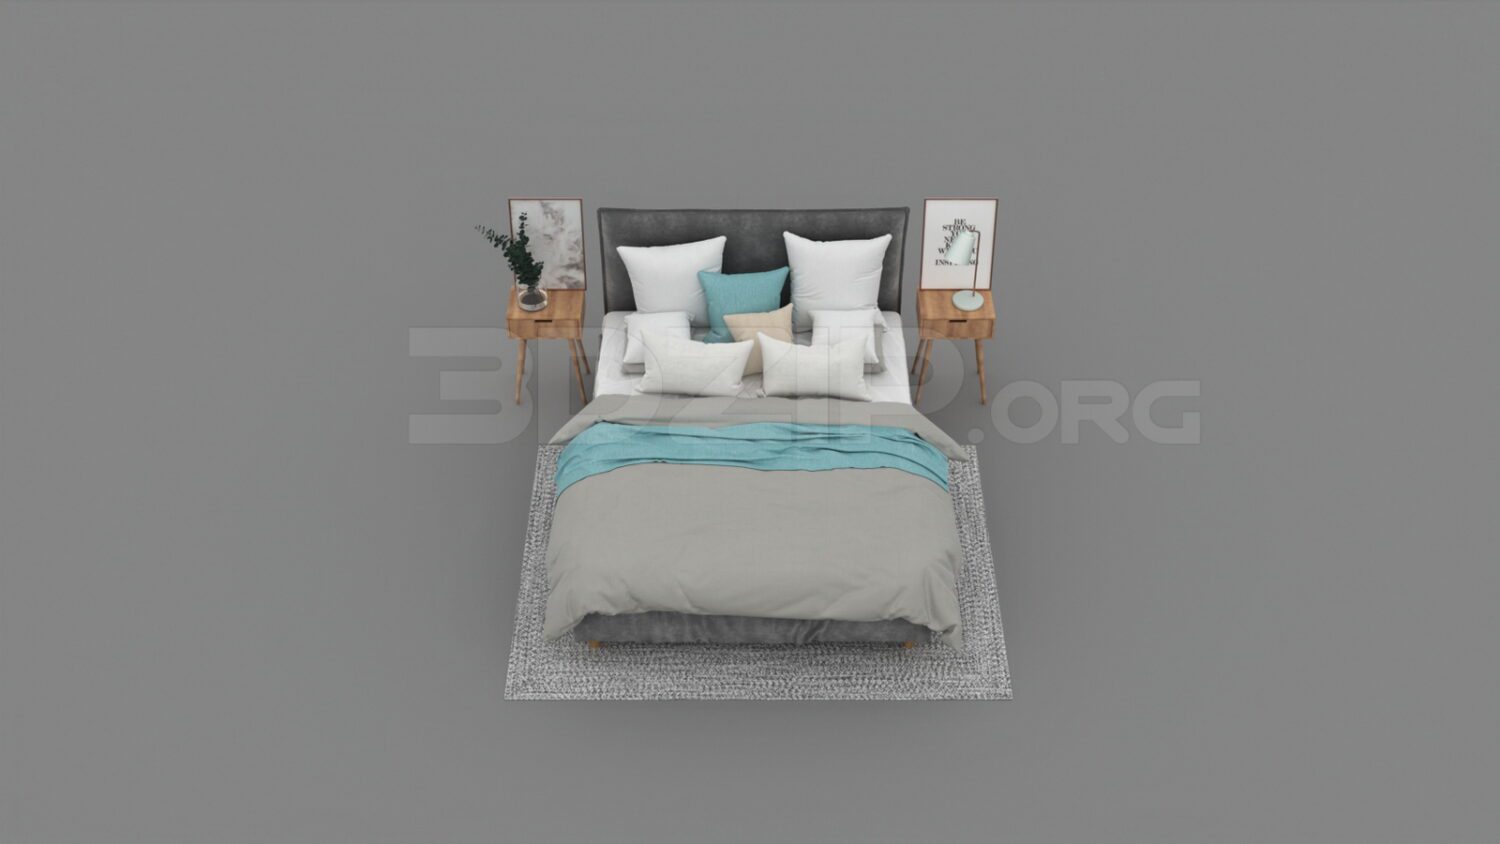 3394. Free 3D Bed Model Download